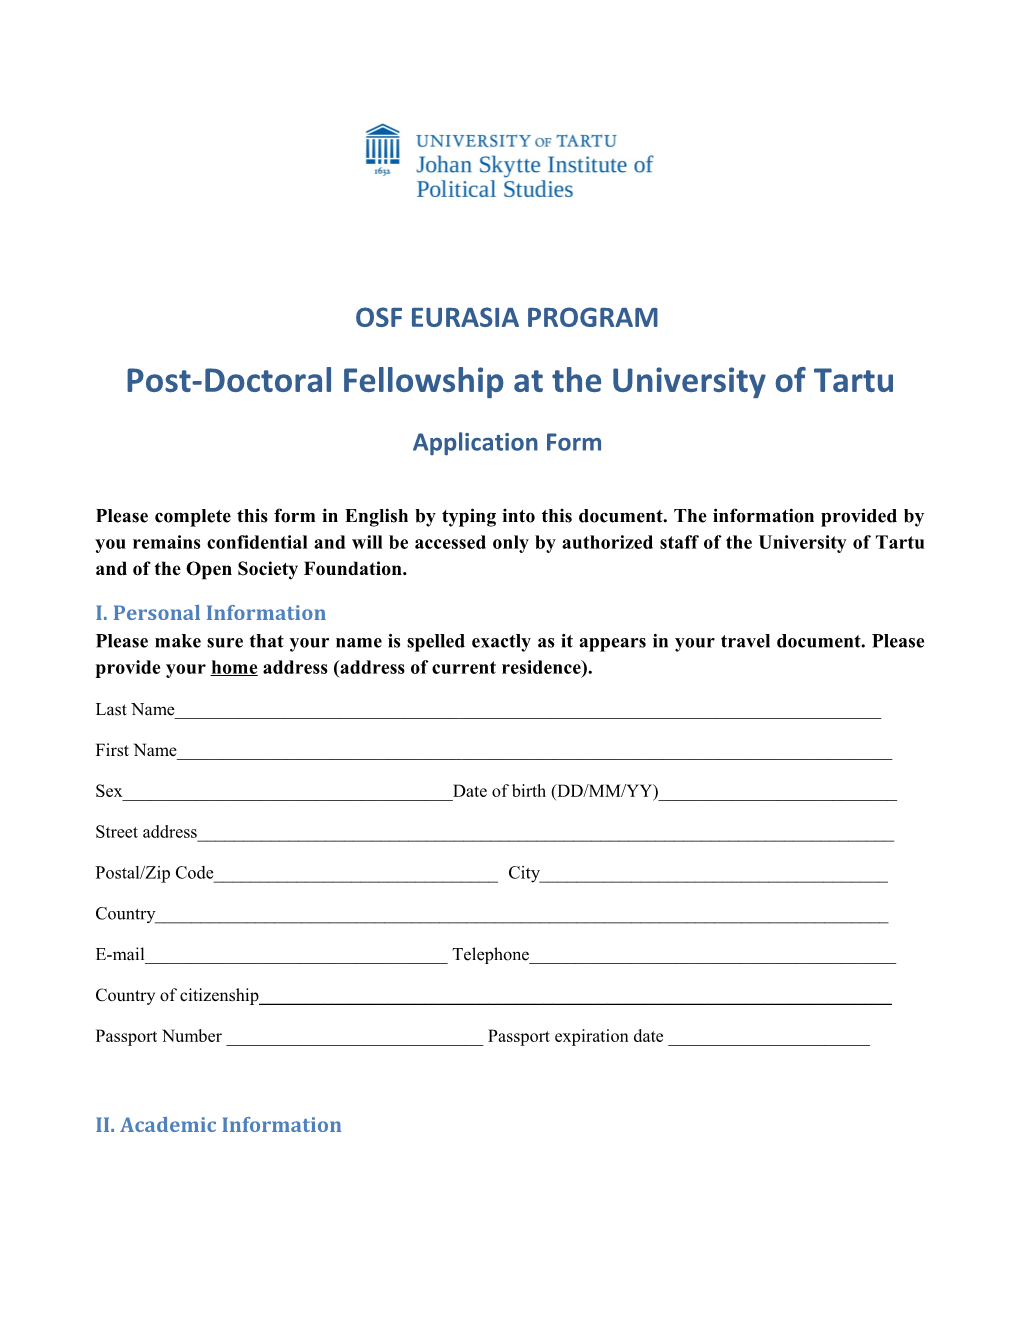 Post-Doctoral Fellowship at the University of Tartu